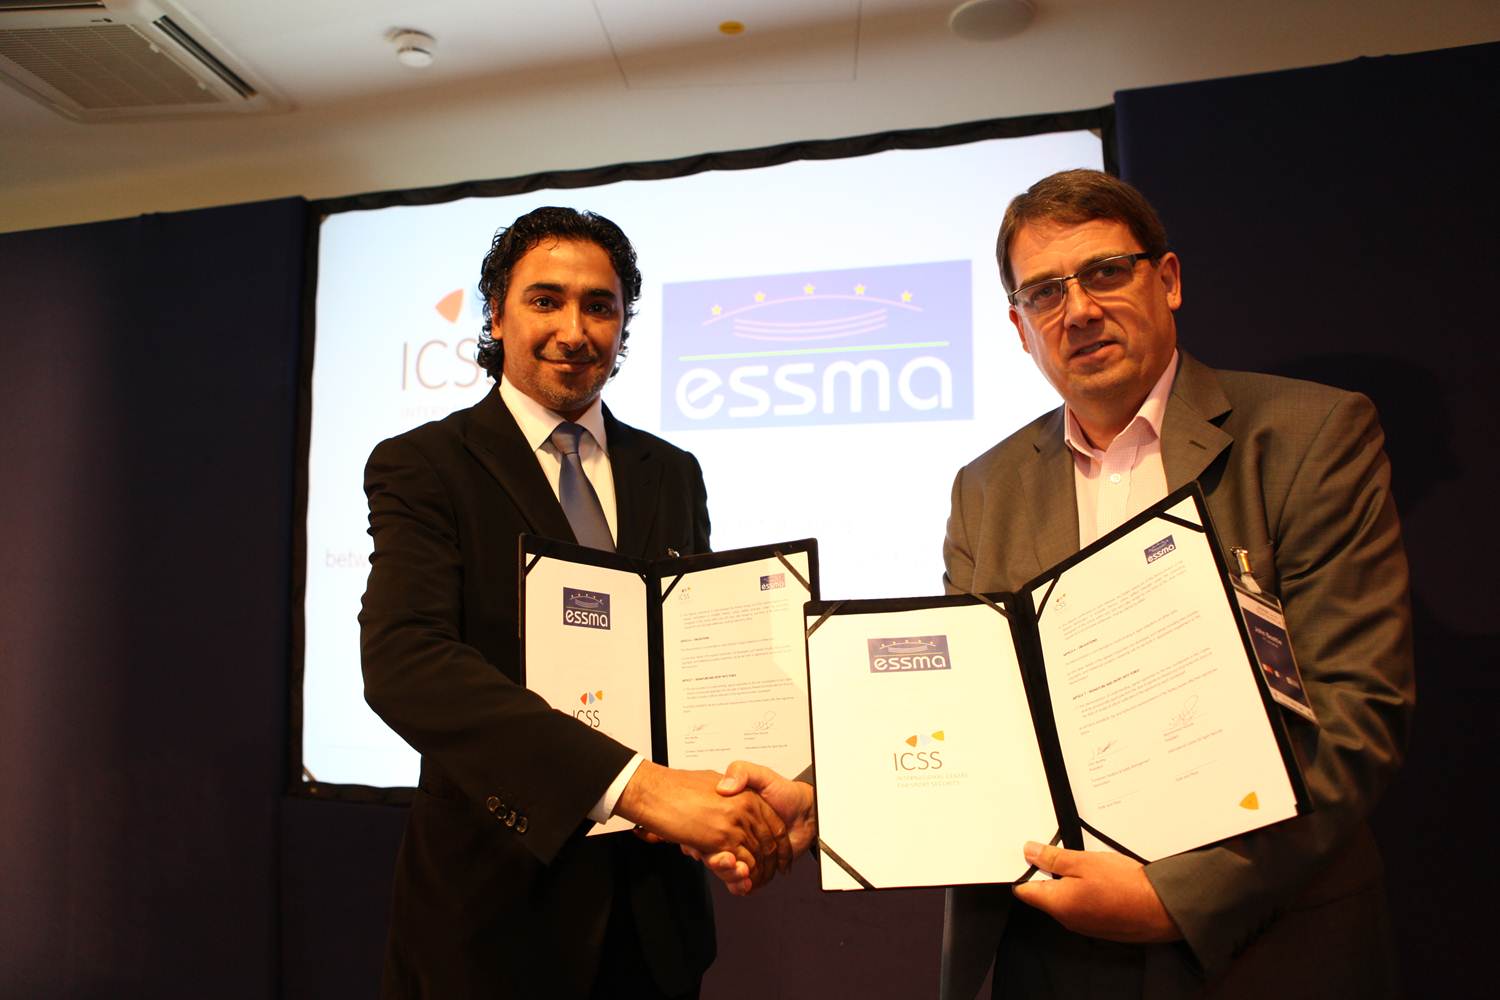 ICSS announces new partnership with the ESSMA